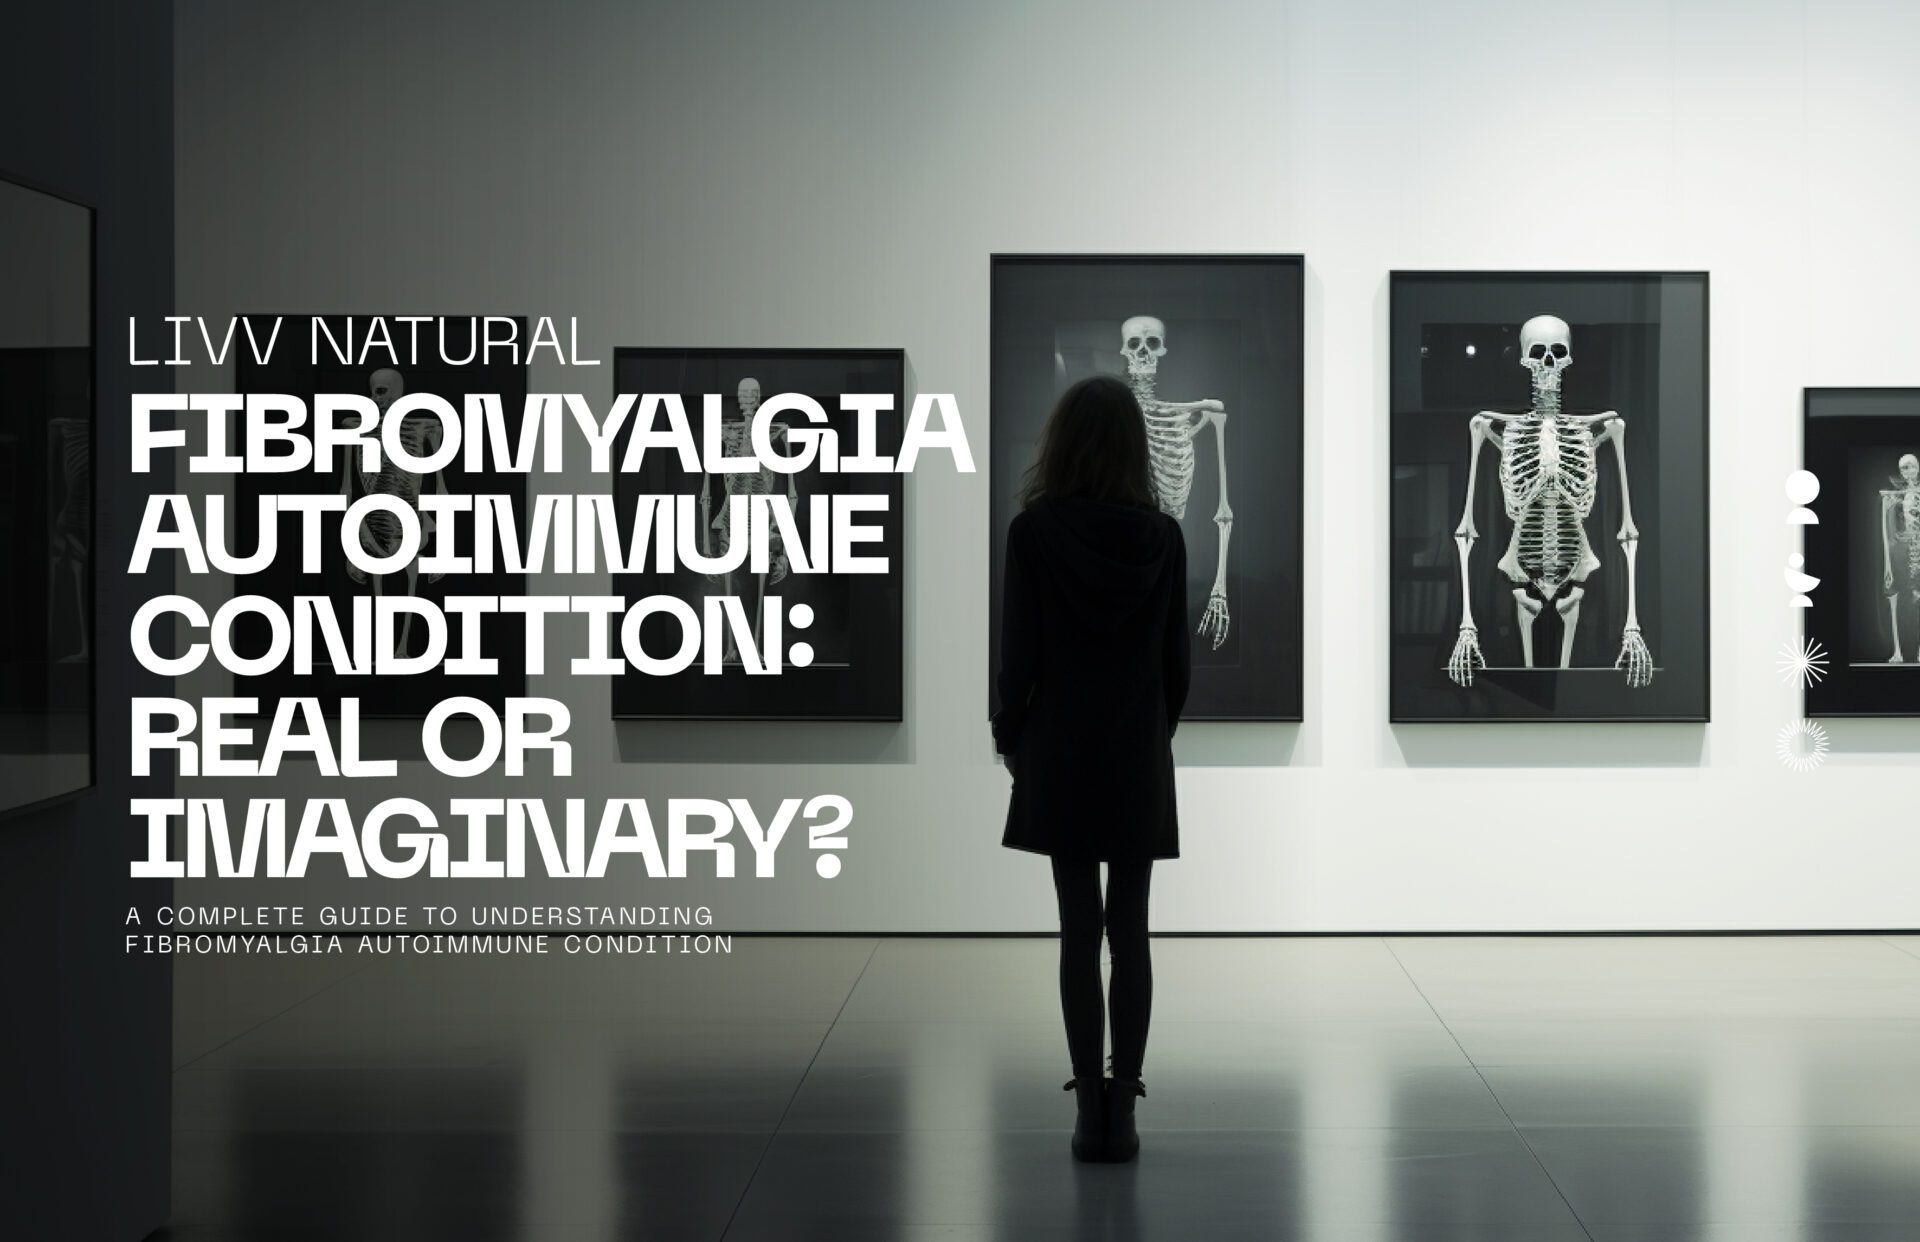 Fibromyalgia autoimmune condition: Real or imaginary?